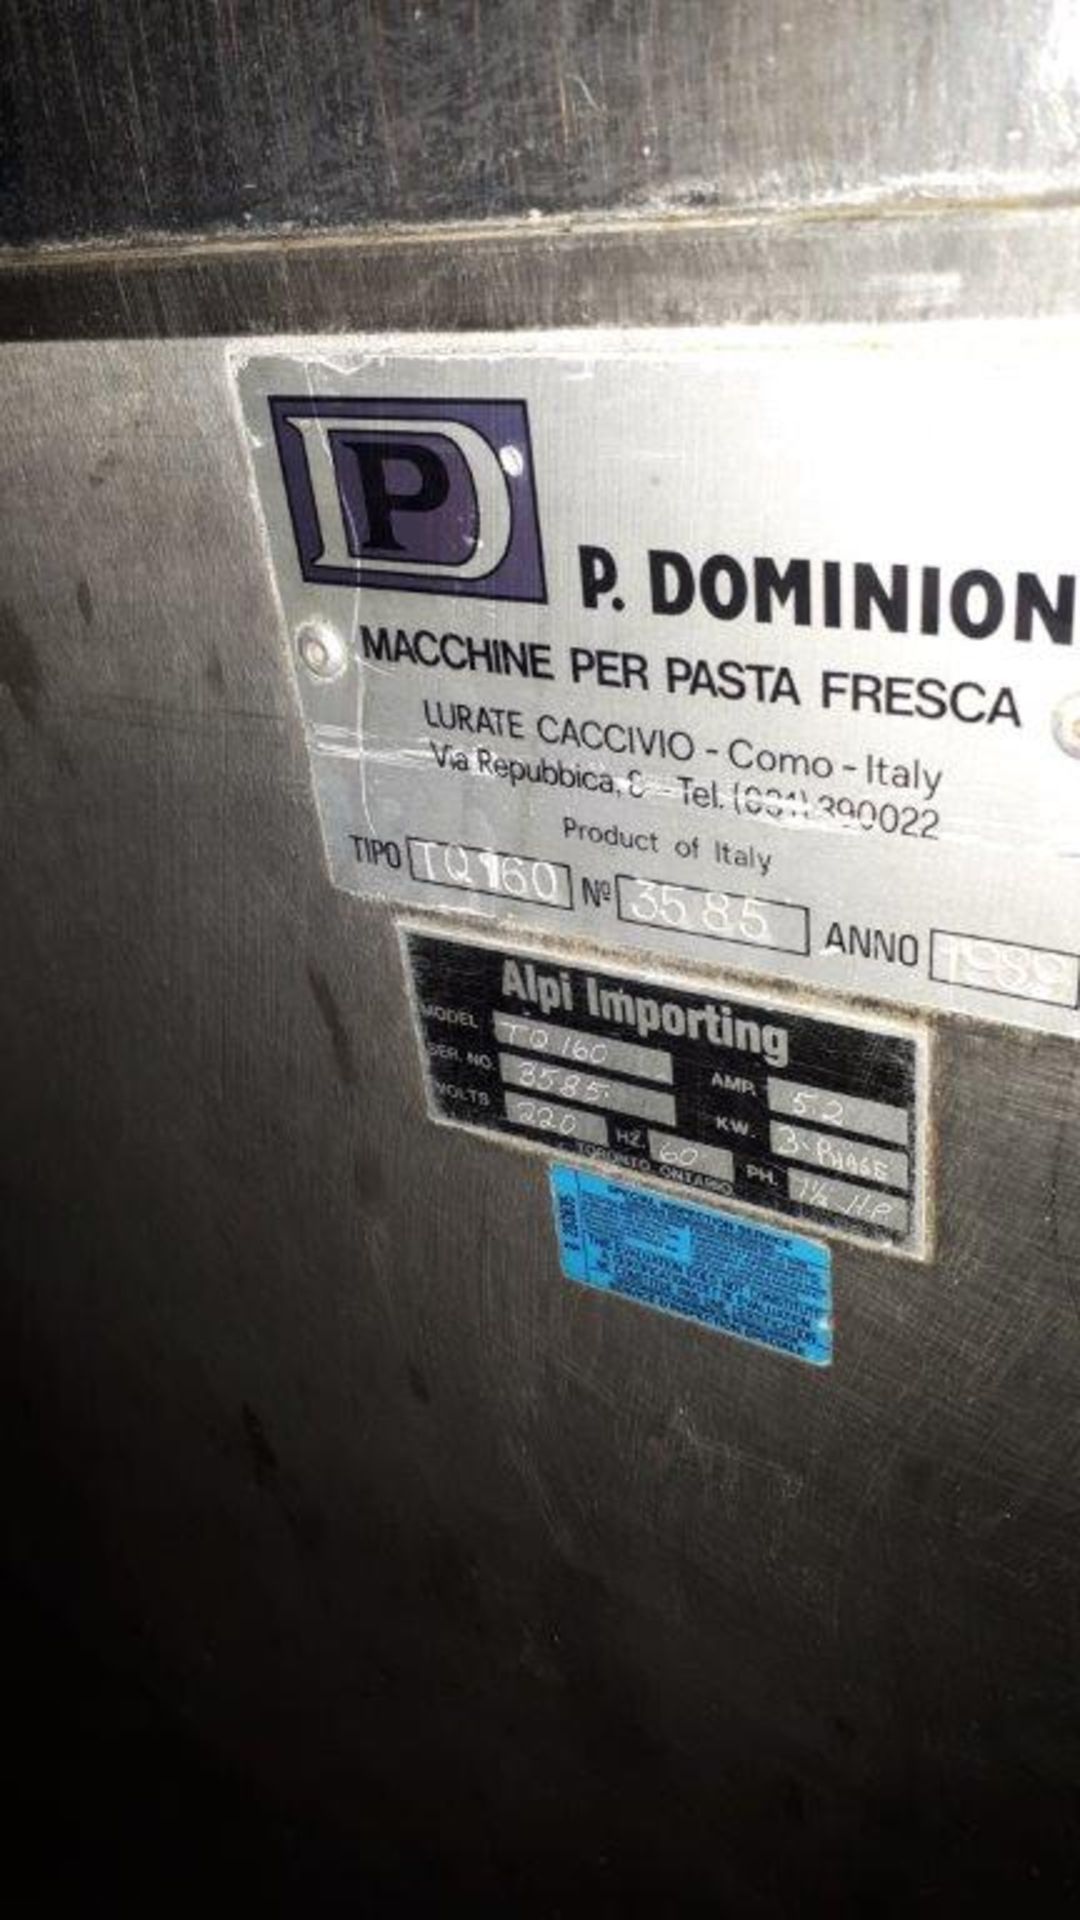 Dominioni S/S Commercial fresh pasta machine, model: TQ160 - Image 5 of 5